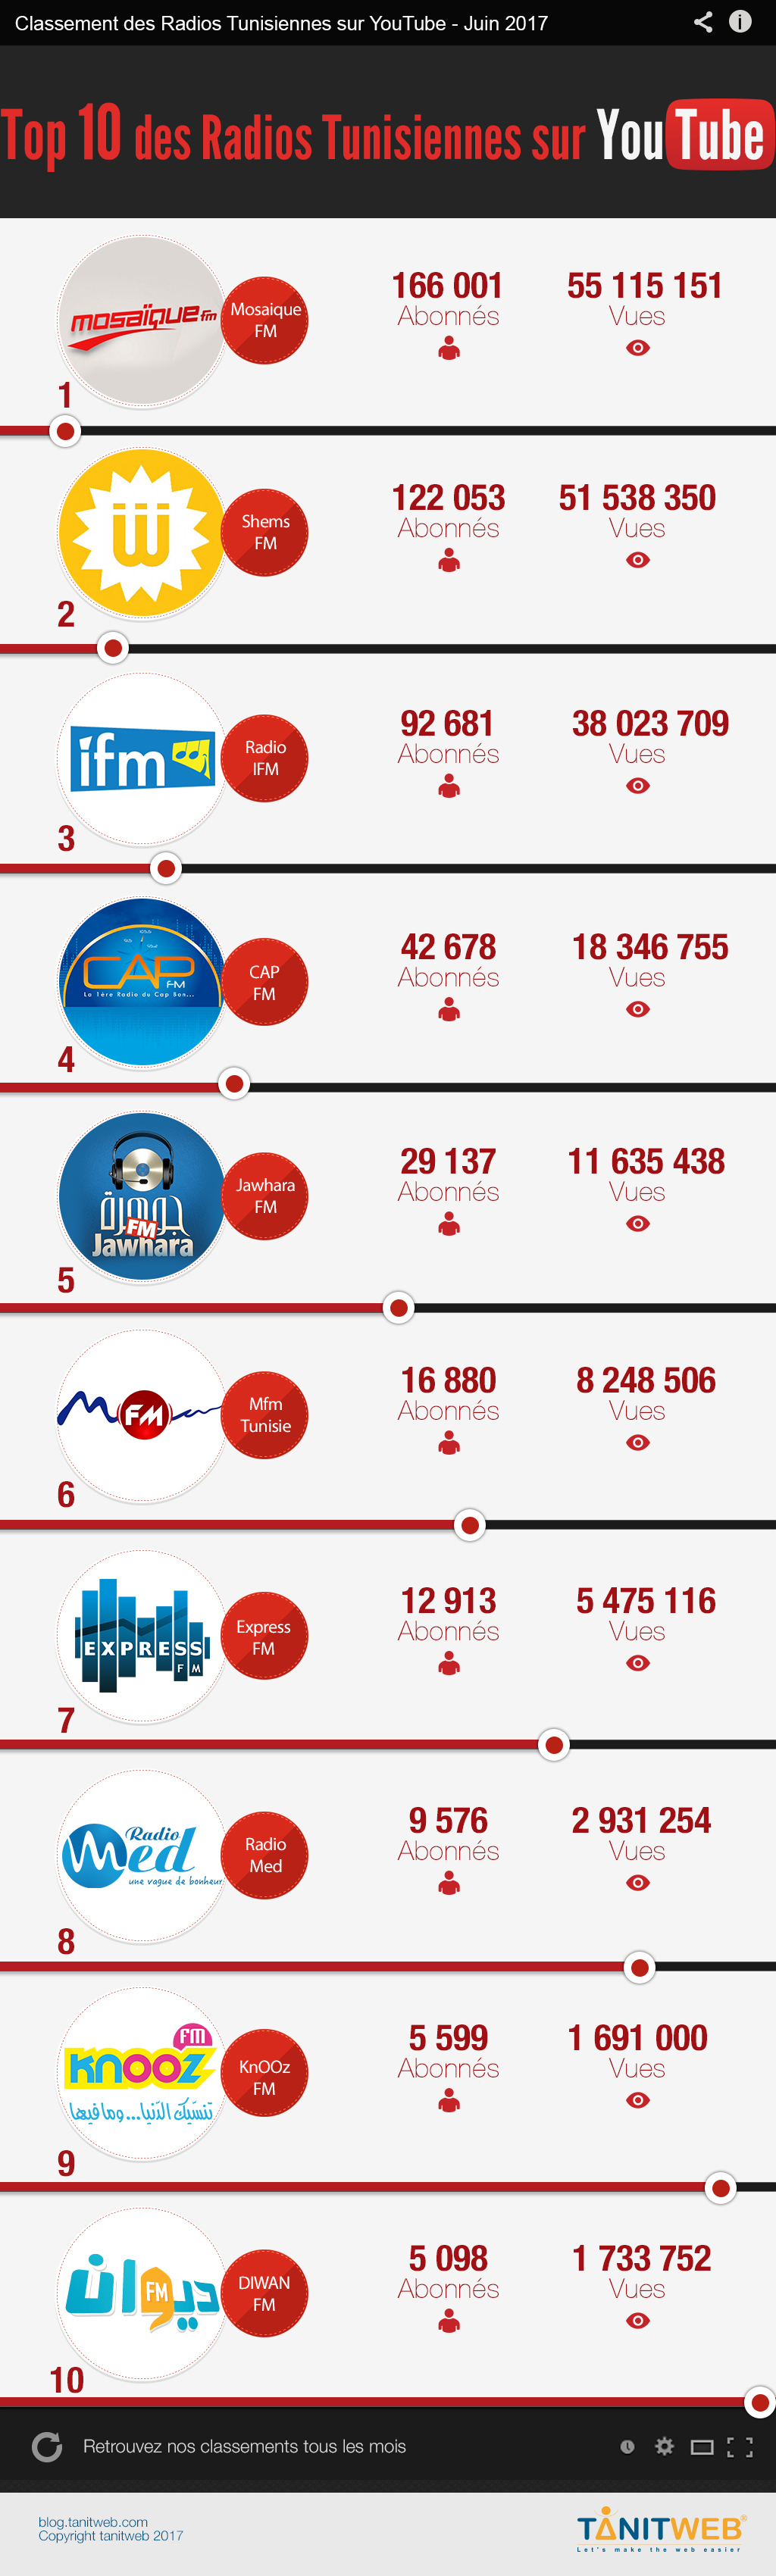 Juin 2017 : TOP 10 des Radios Tunisiennes sur YouTube